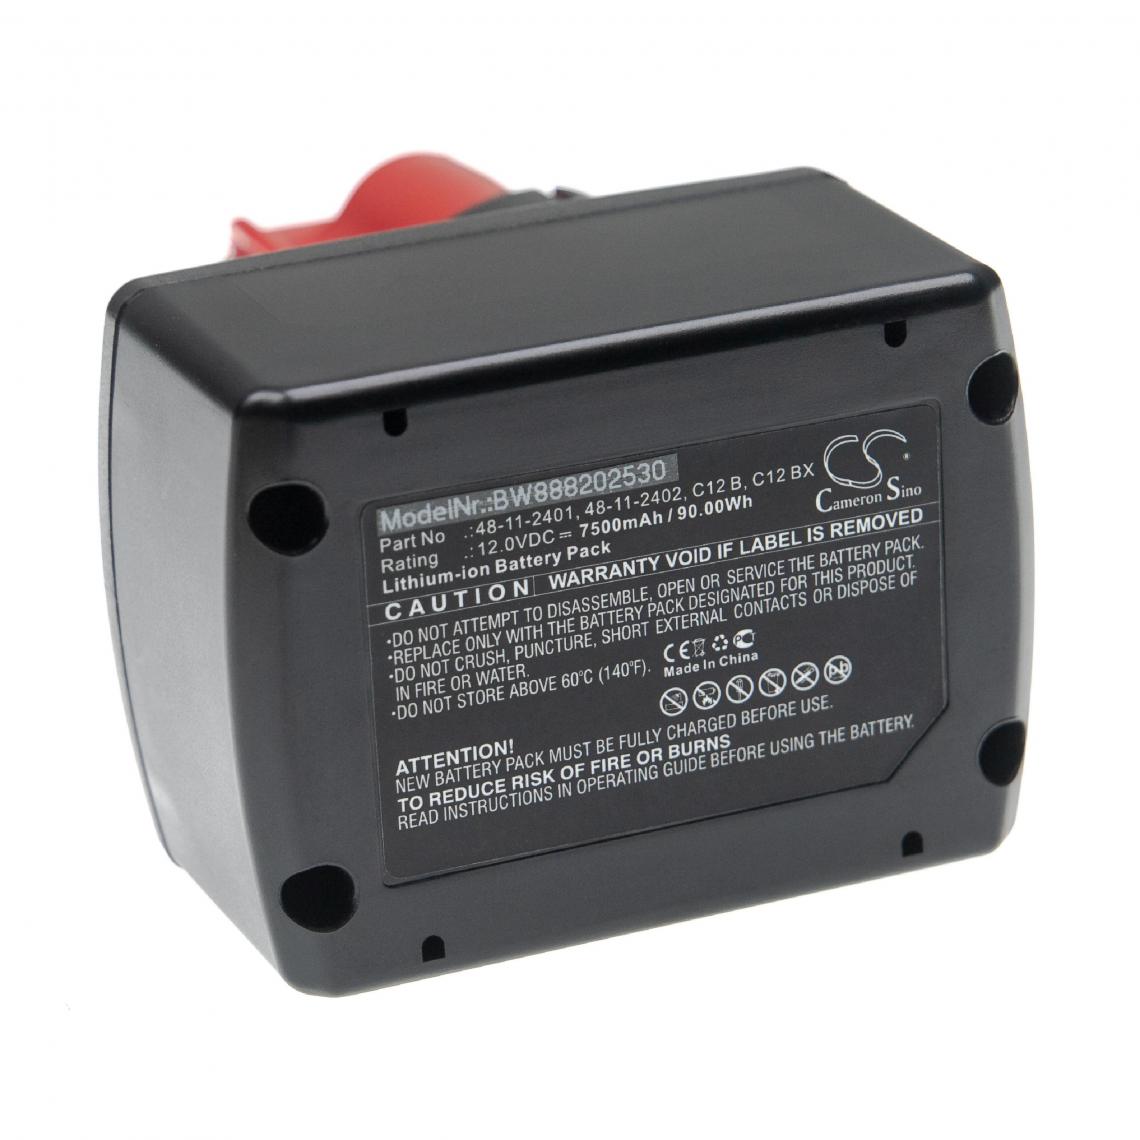 Vhbw - vhbw Batterie compatible avec Milwaukee C12 D, C12 DD, C12 FM, C12 HZ, C12 HZ-0, C12 HZ-202C outil électrique (7500mAh Li-ion 12 V) - Clouterie